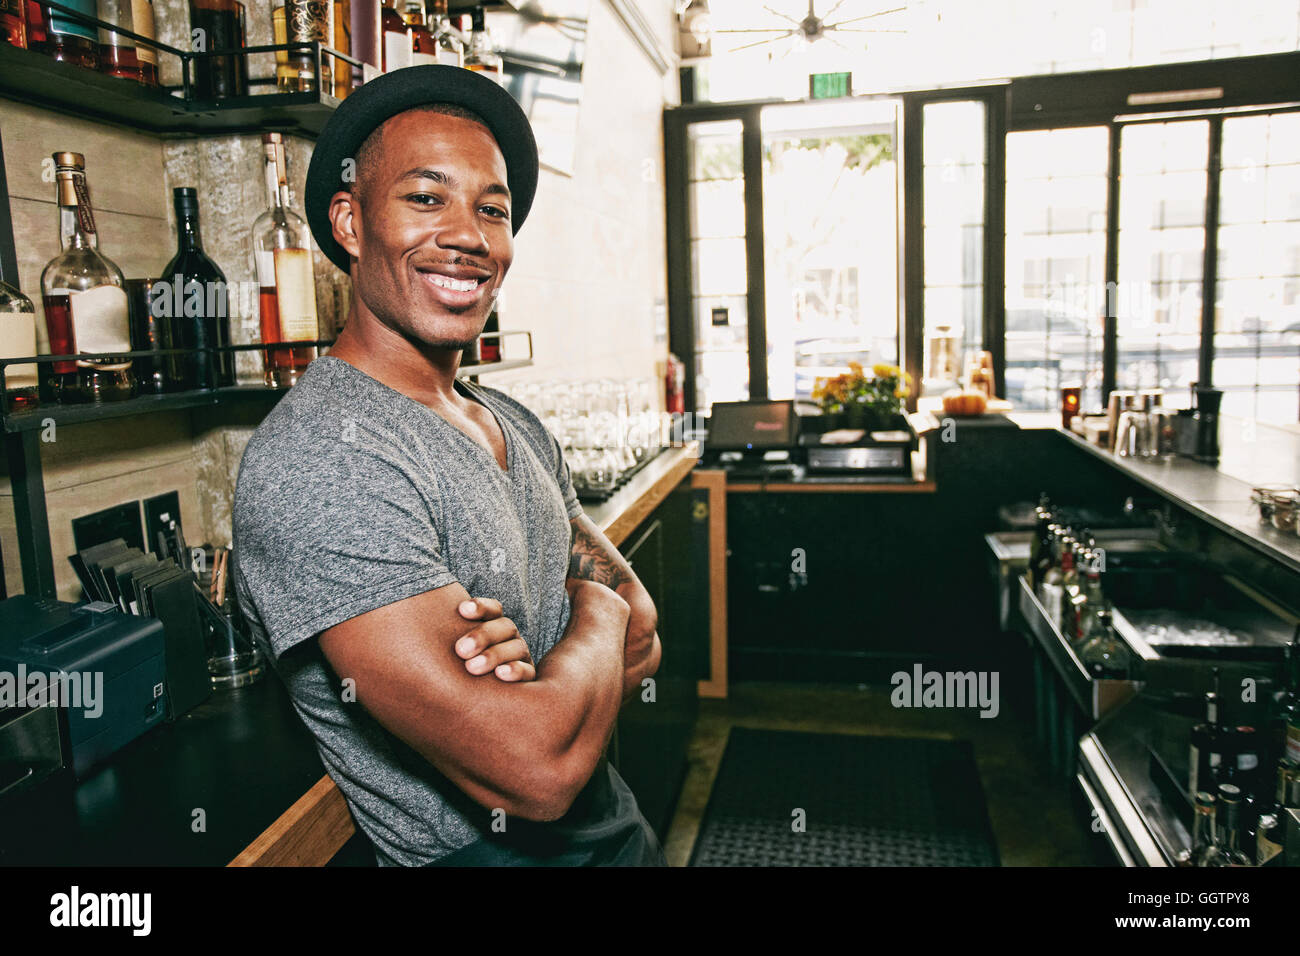 Smiling Black bartender relaxing behind bar Stock Photo